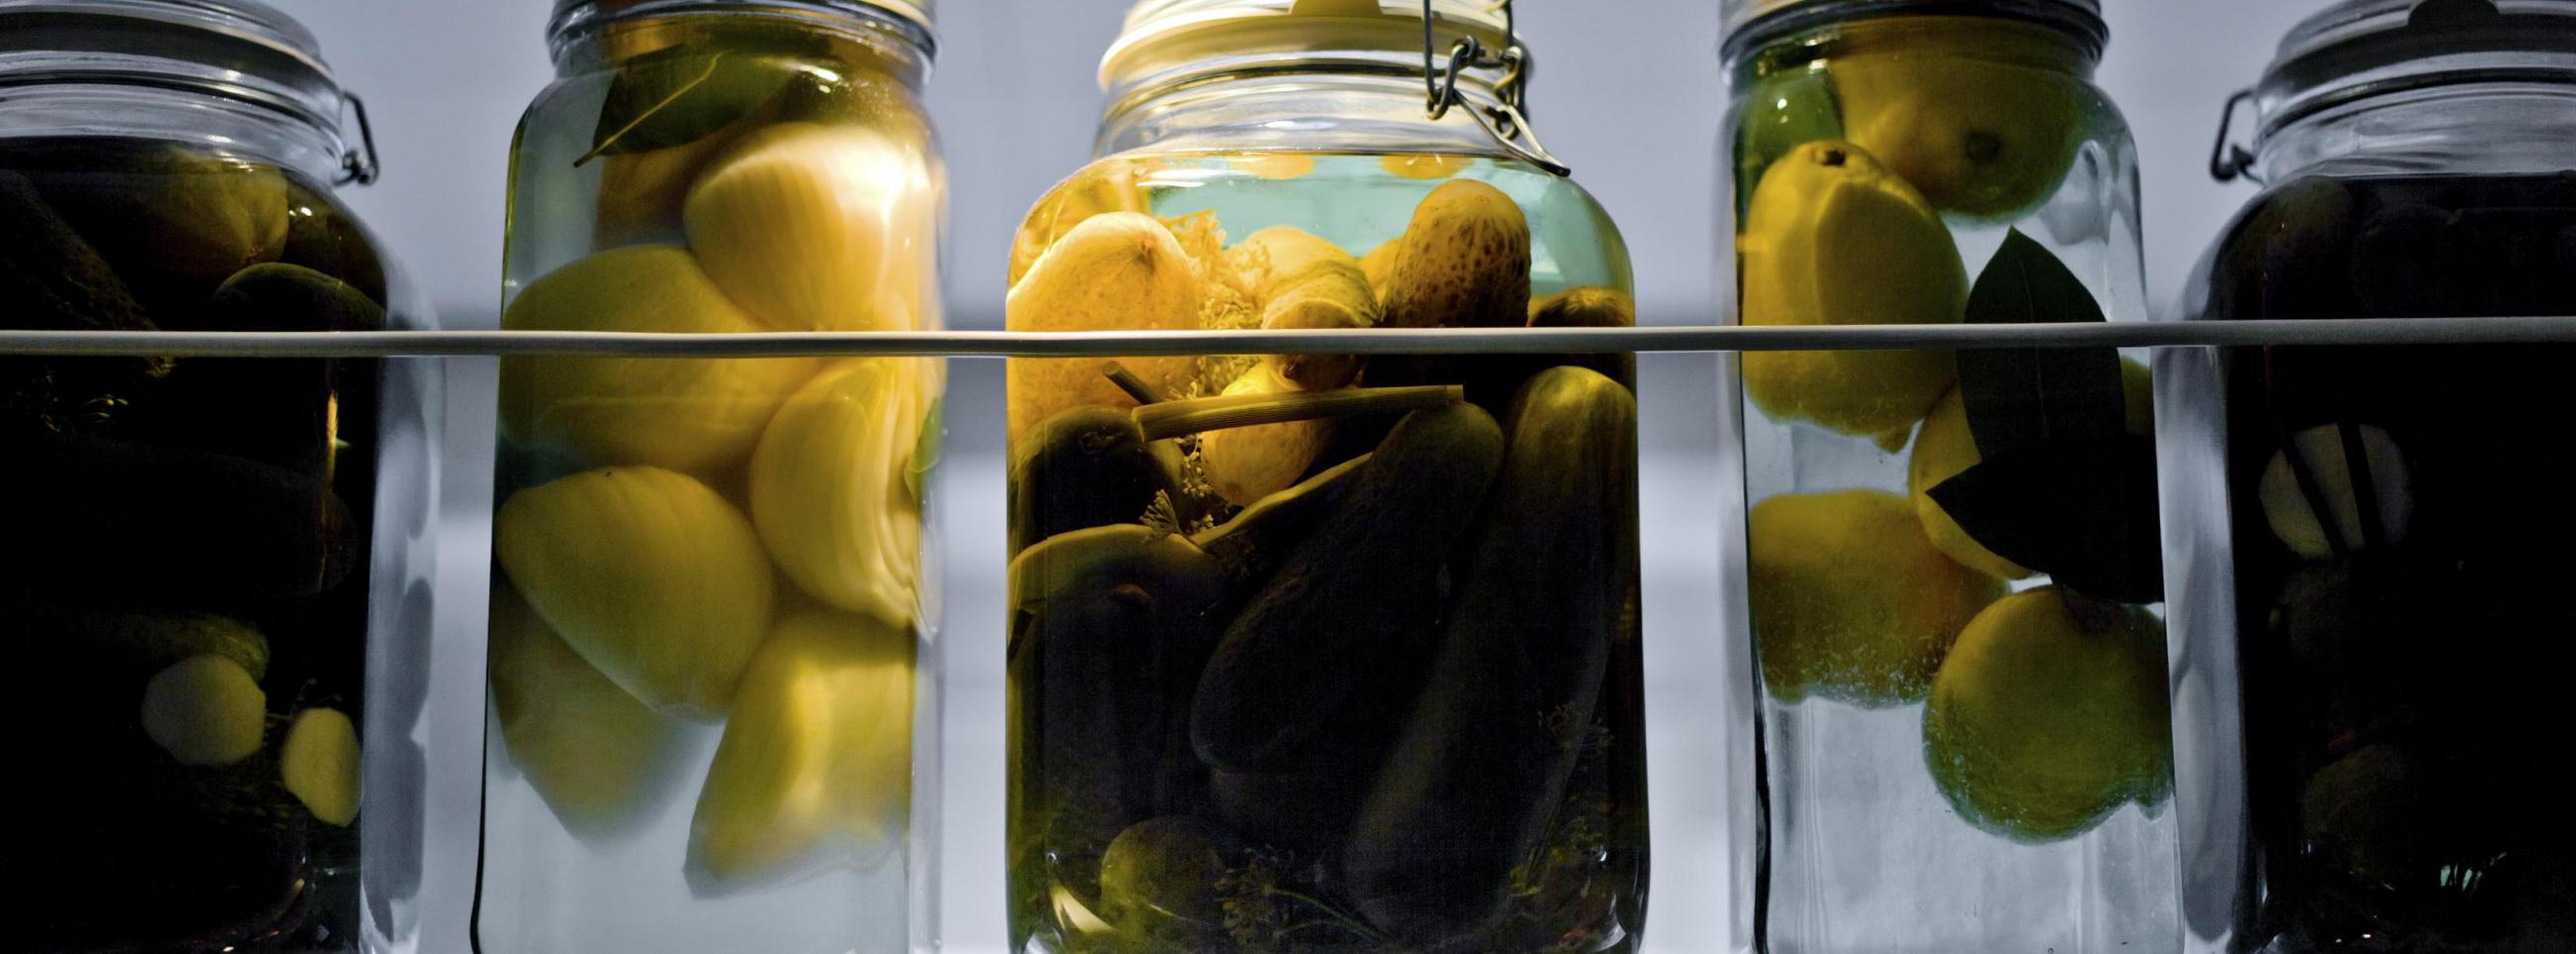 Jars of pickled vegetables in row